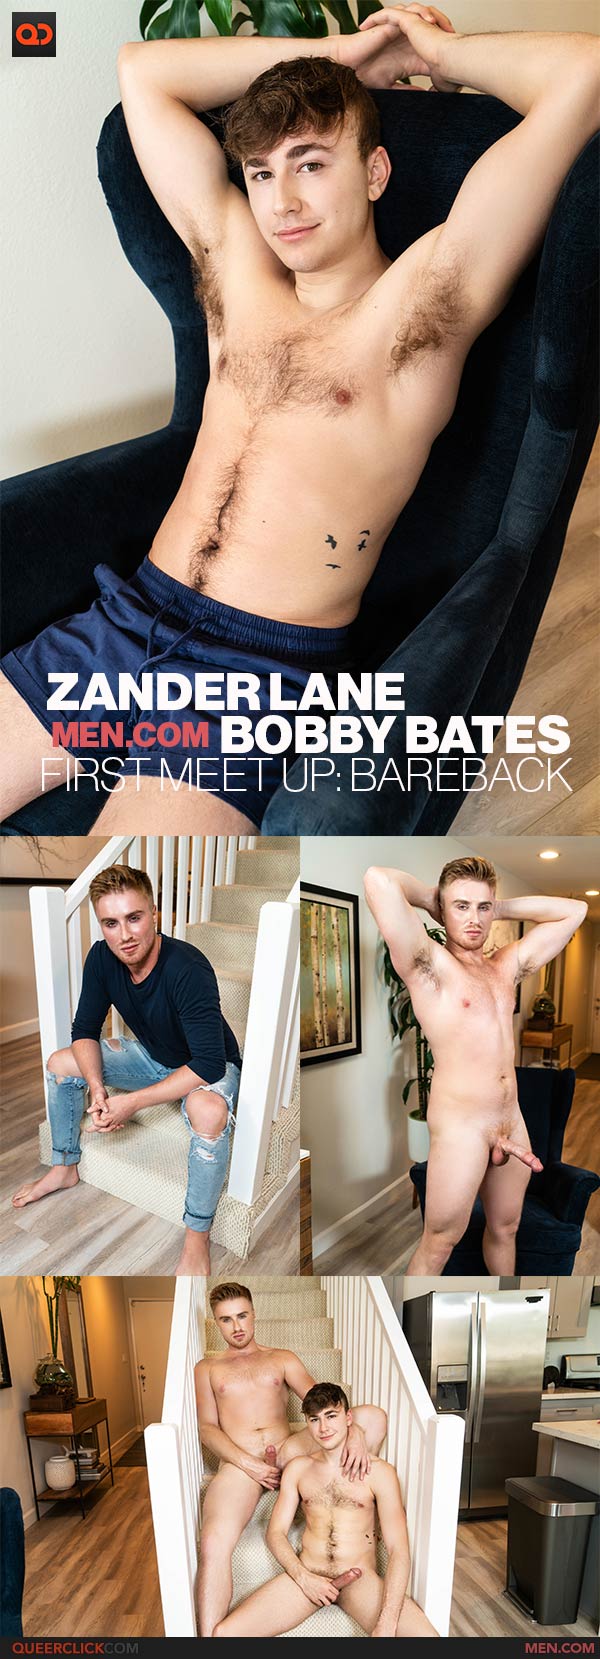 Men.com: Zander Lane and Bobby Bates